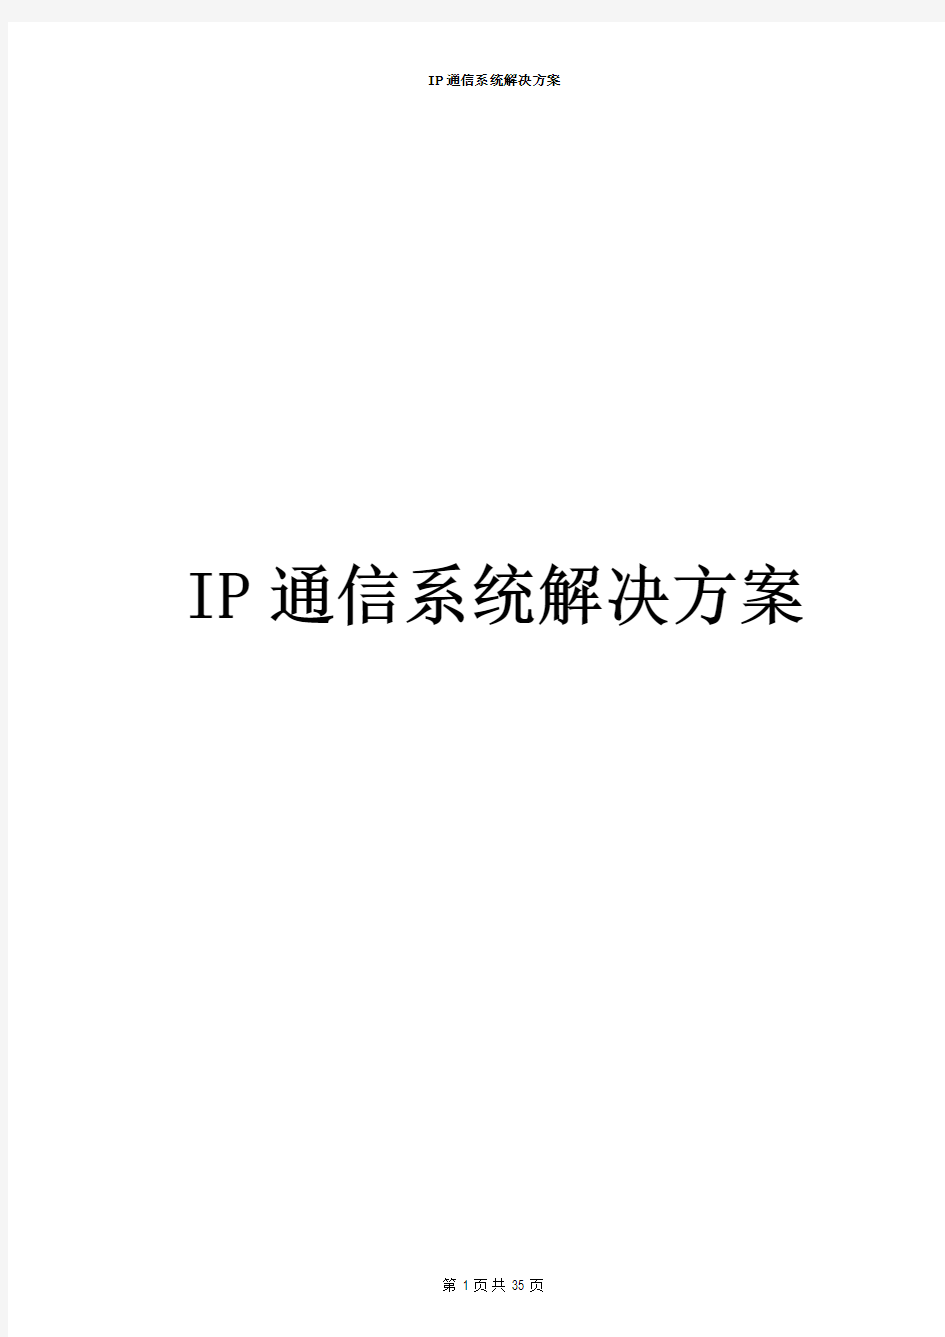 IP通信系统解决方案